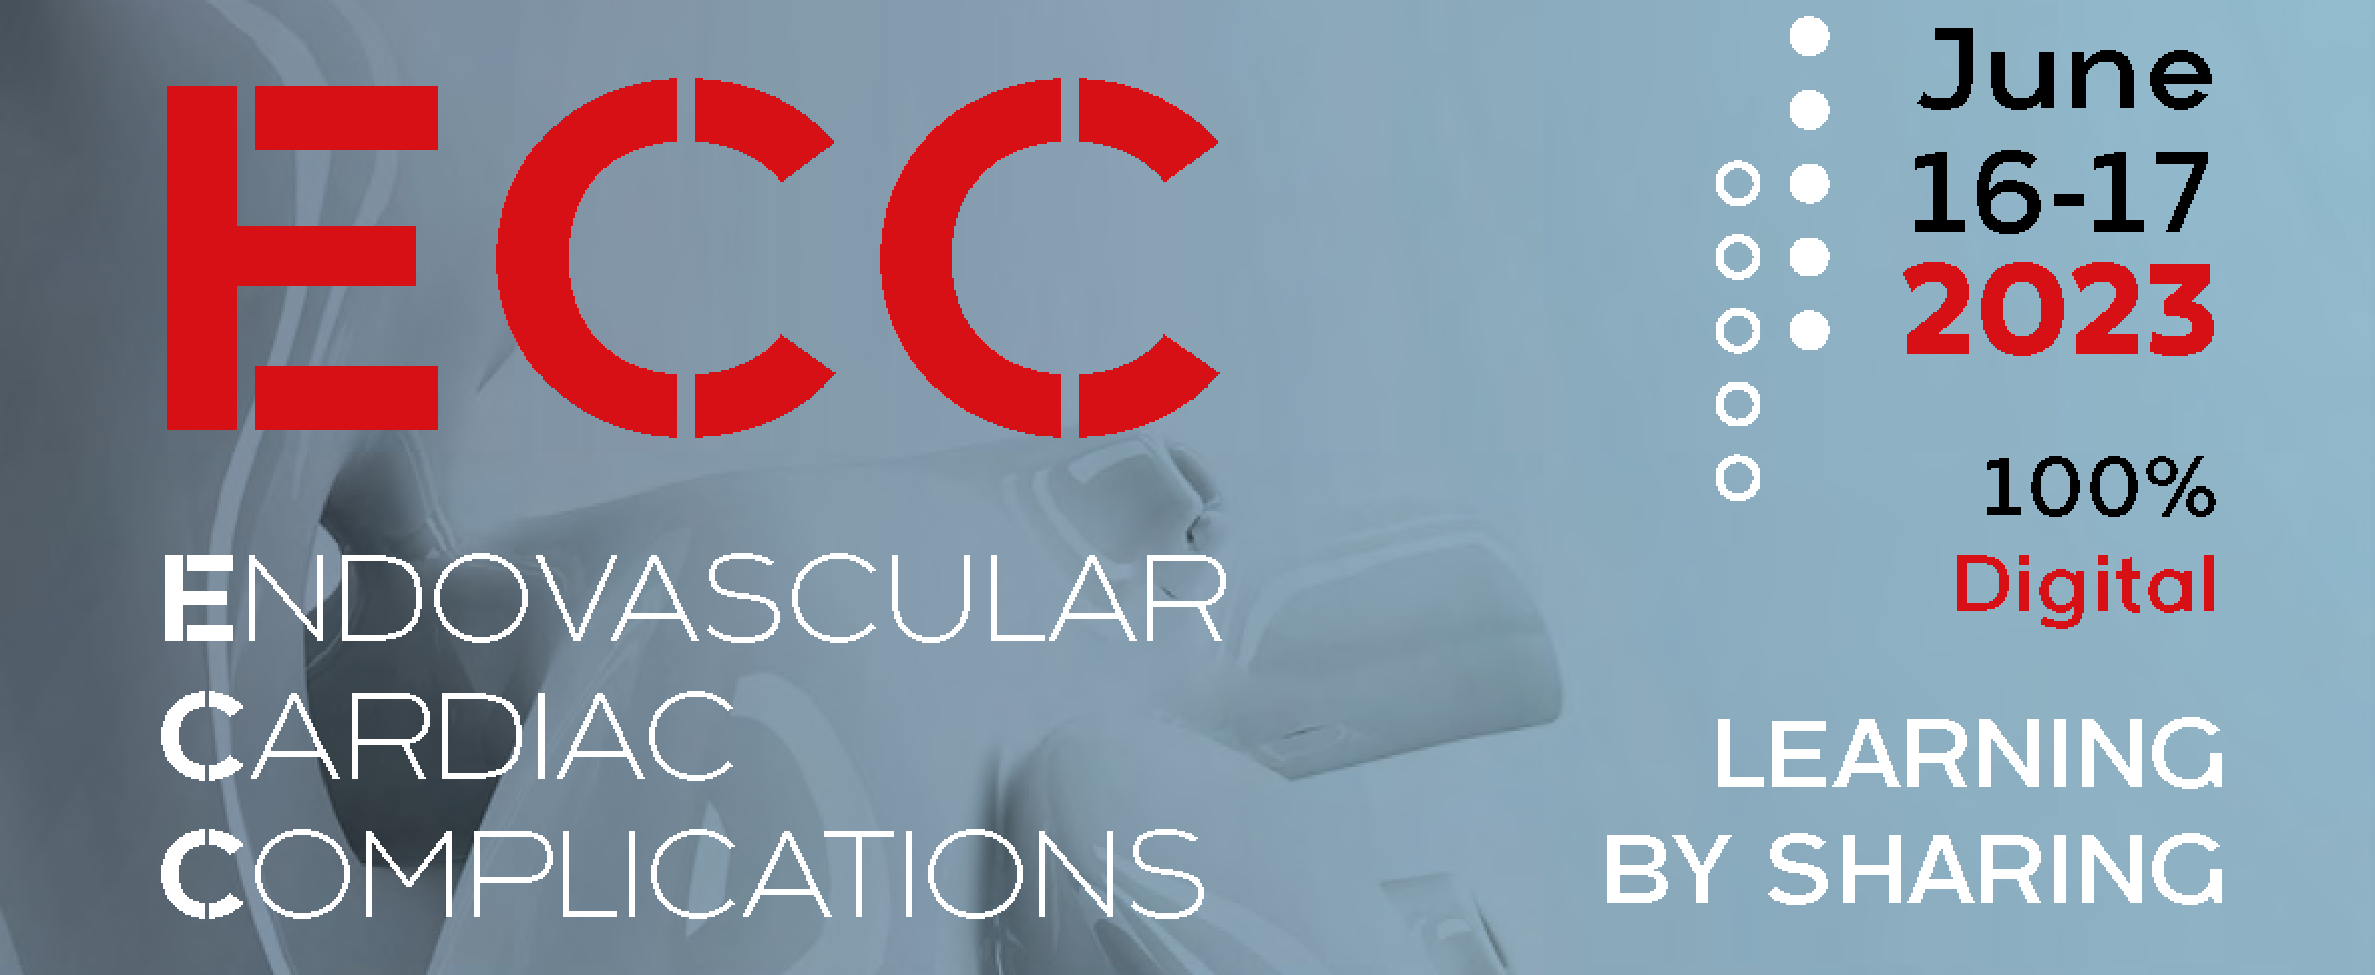 16th edition of Endovascular Cardiac Complications - ECC 2023